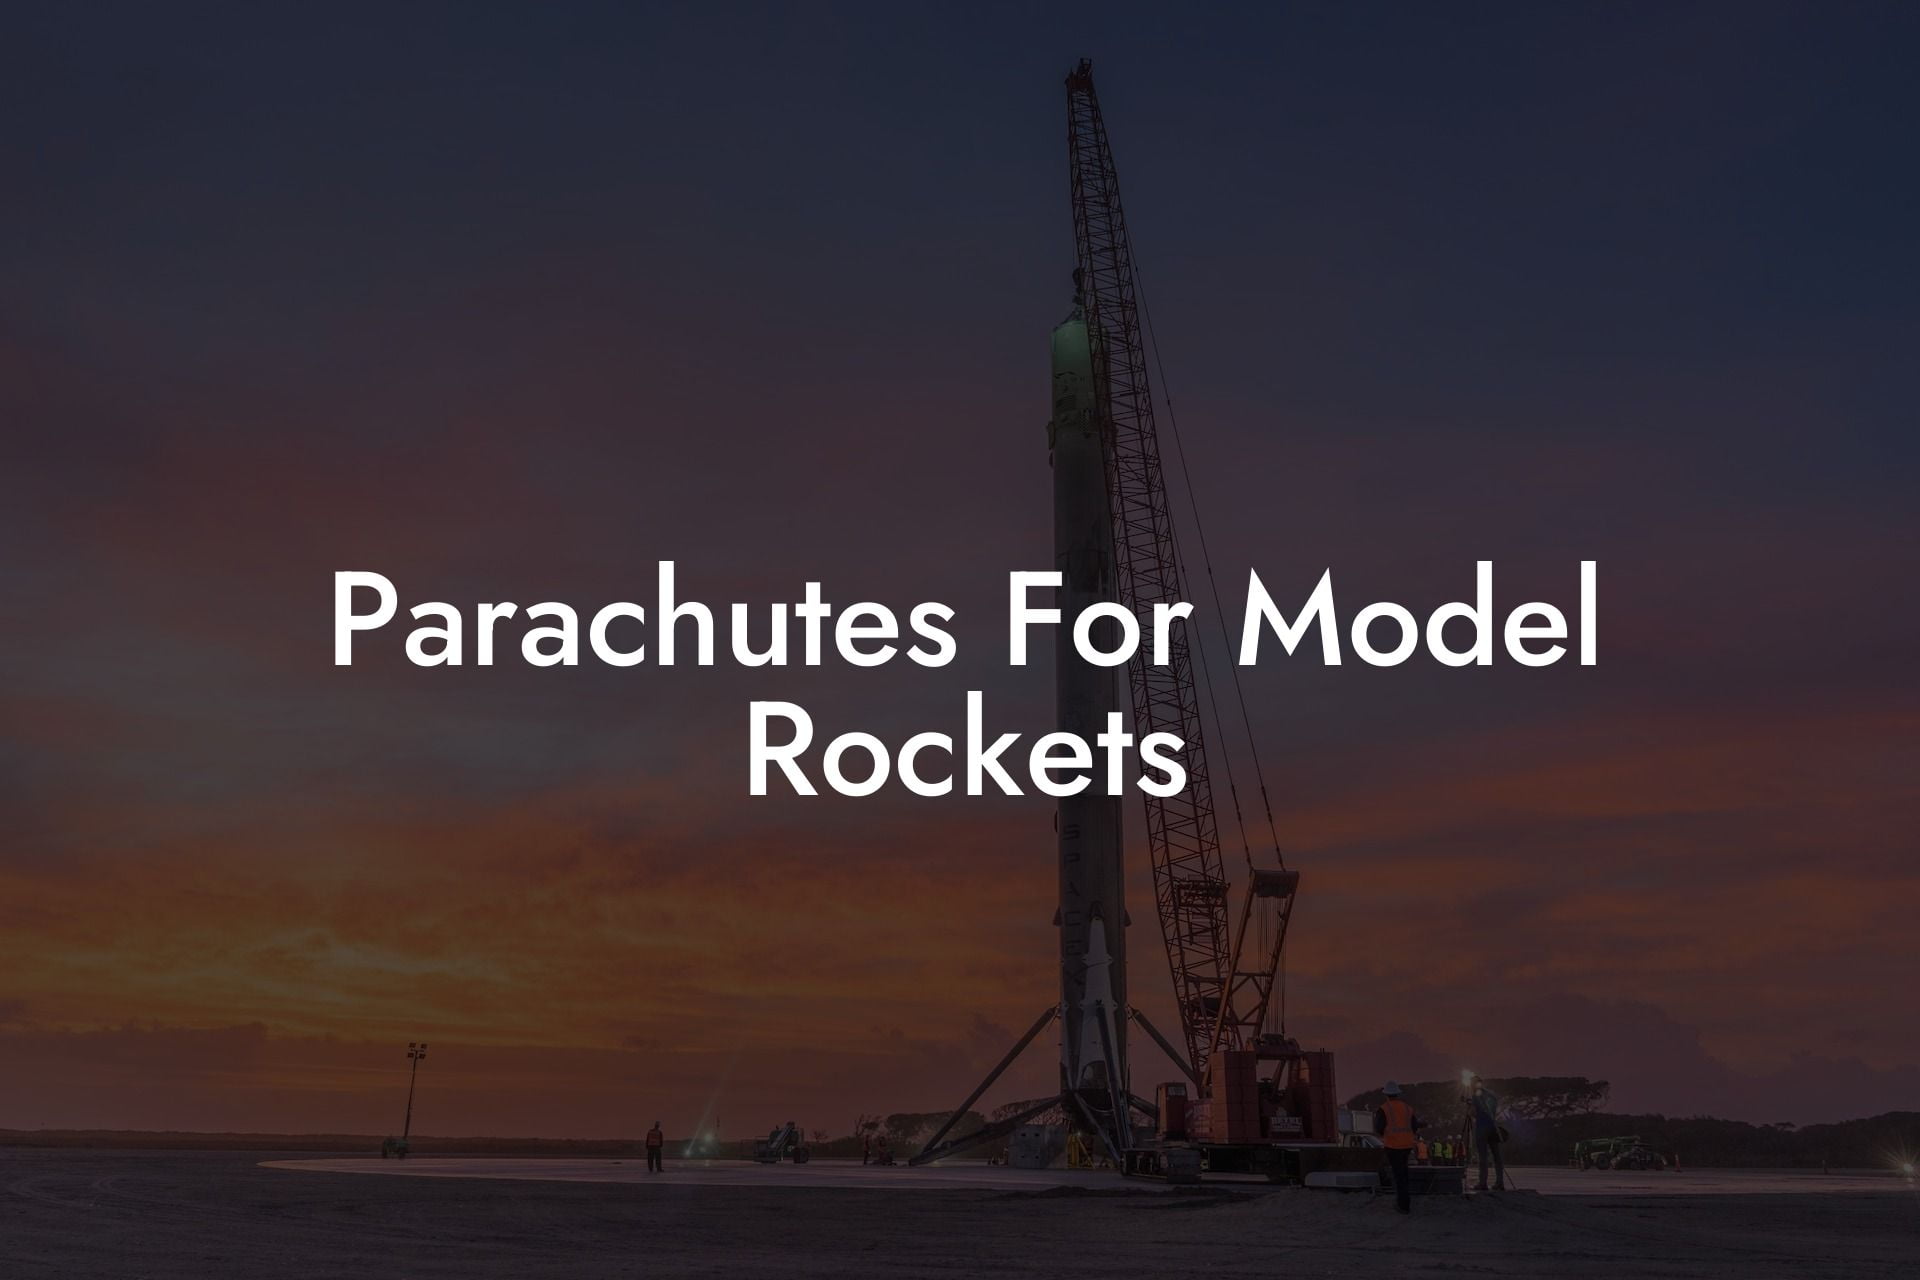 Parachutes For Model Rockets